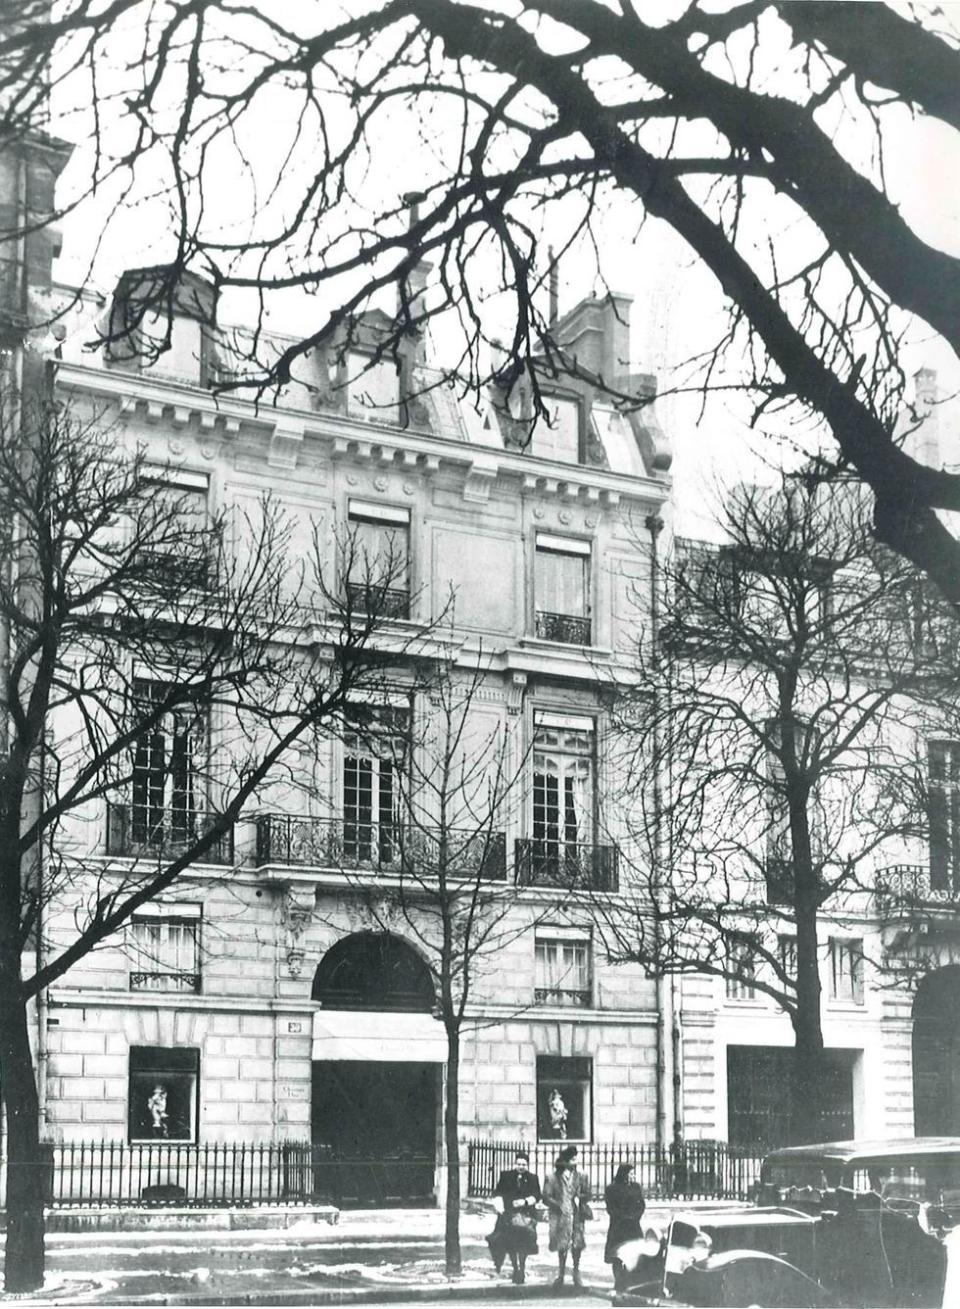 Photo credit: 30 Avenue Montaigne, circa 1947. Dior Héritage collection, Paris